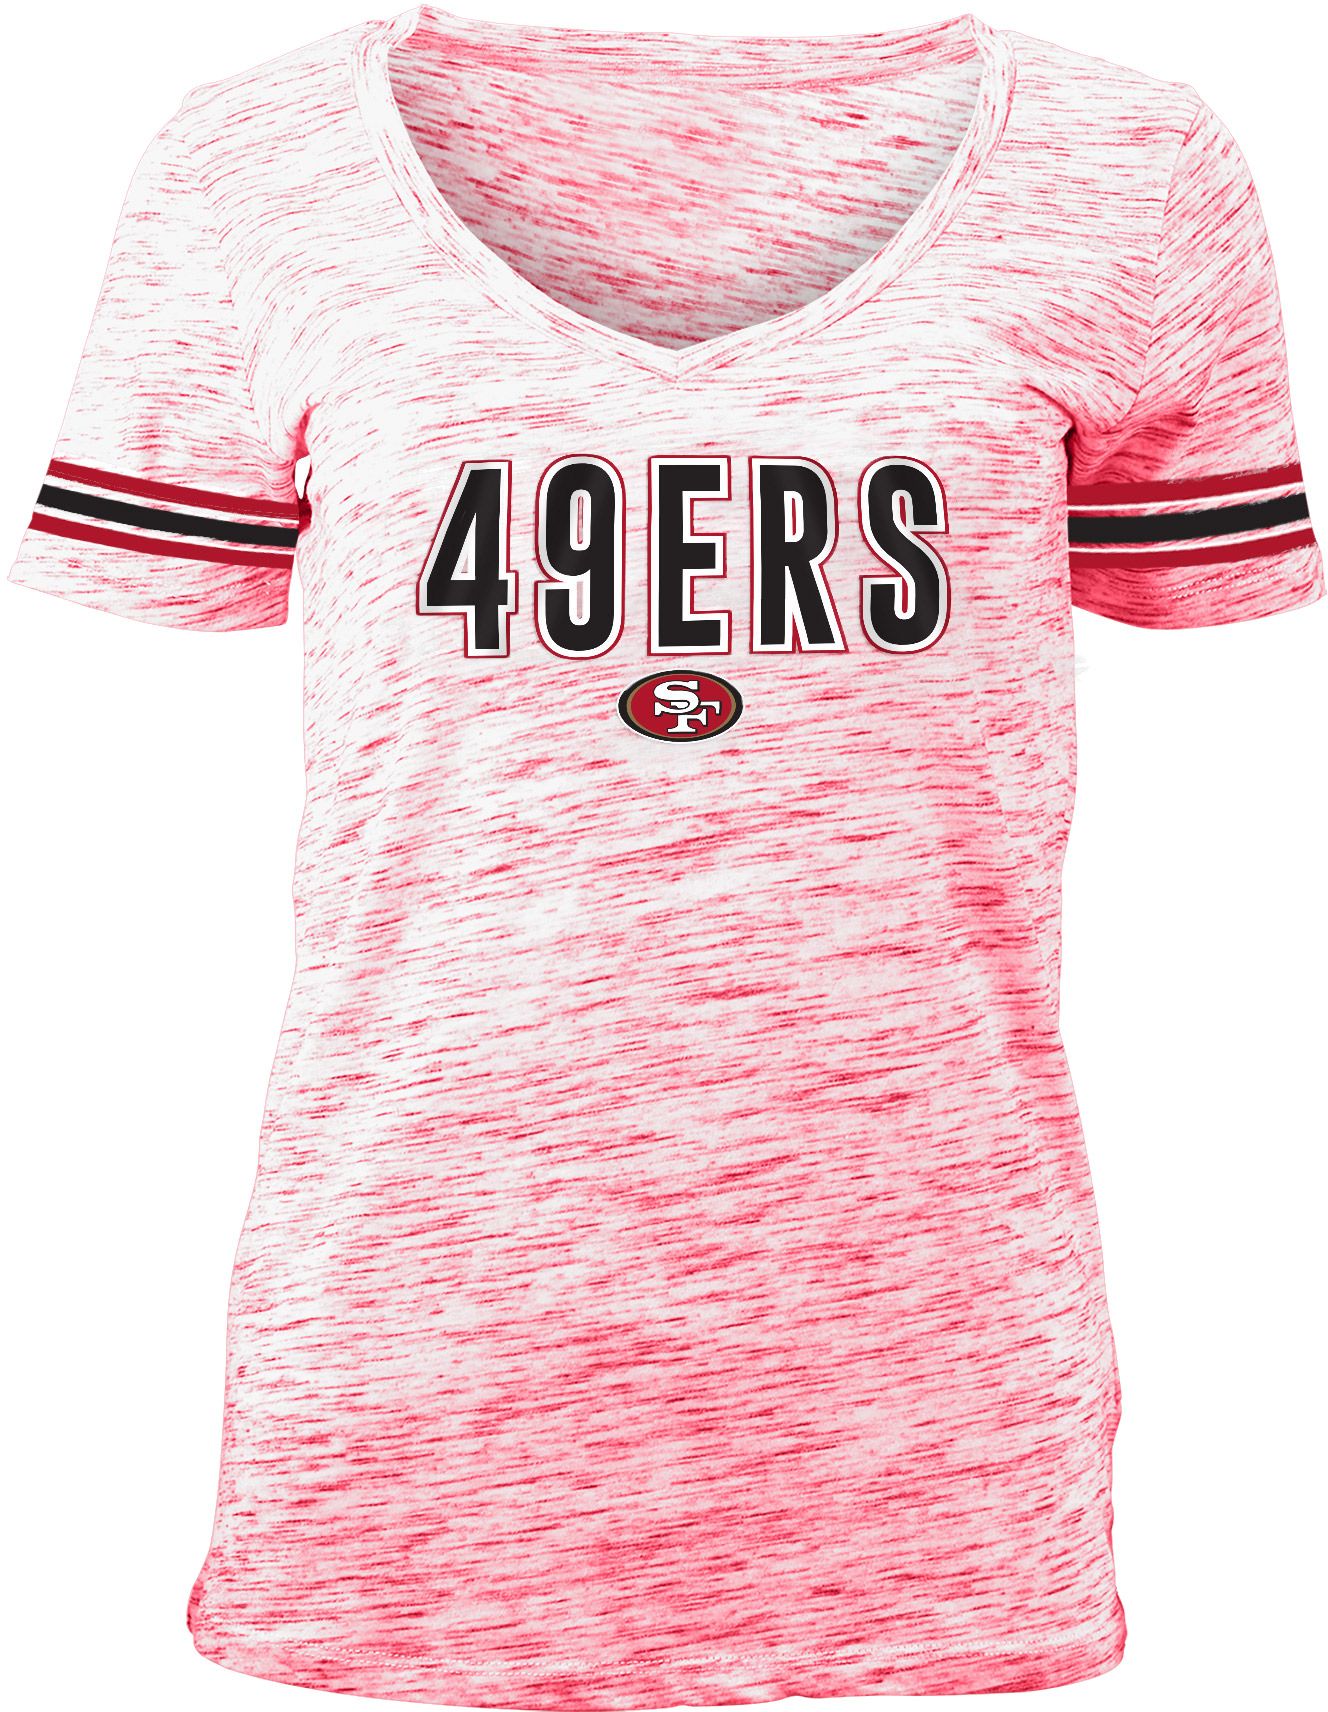 nfl 49ers women's apparel